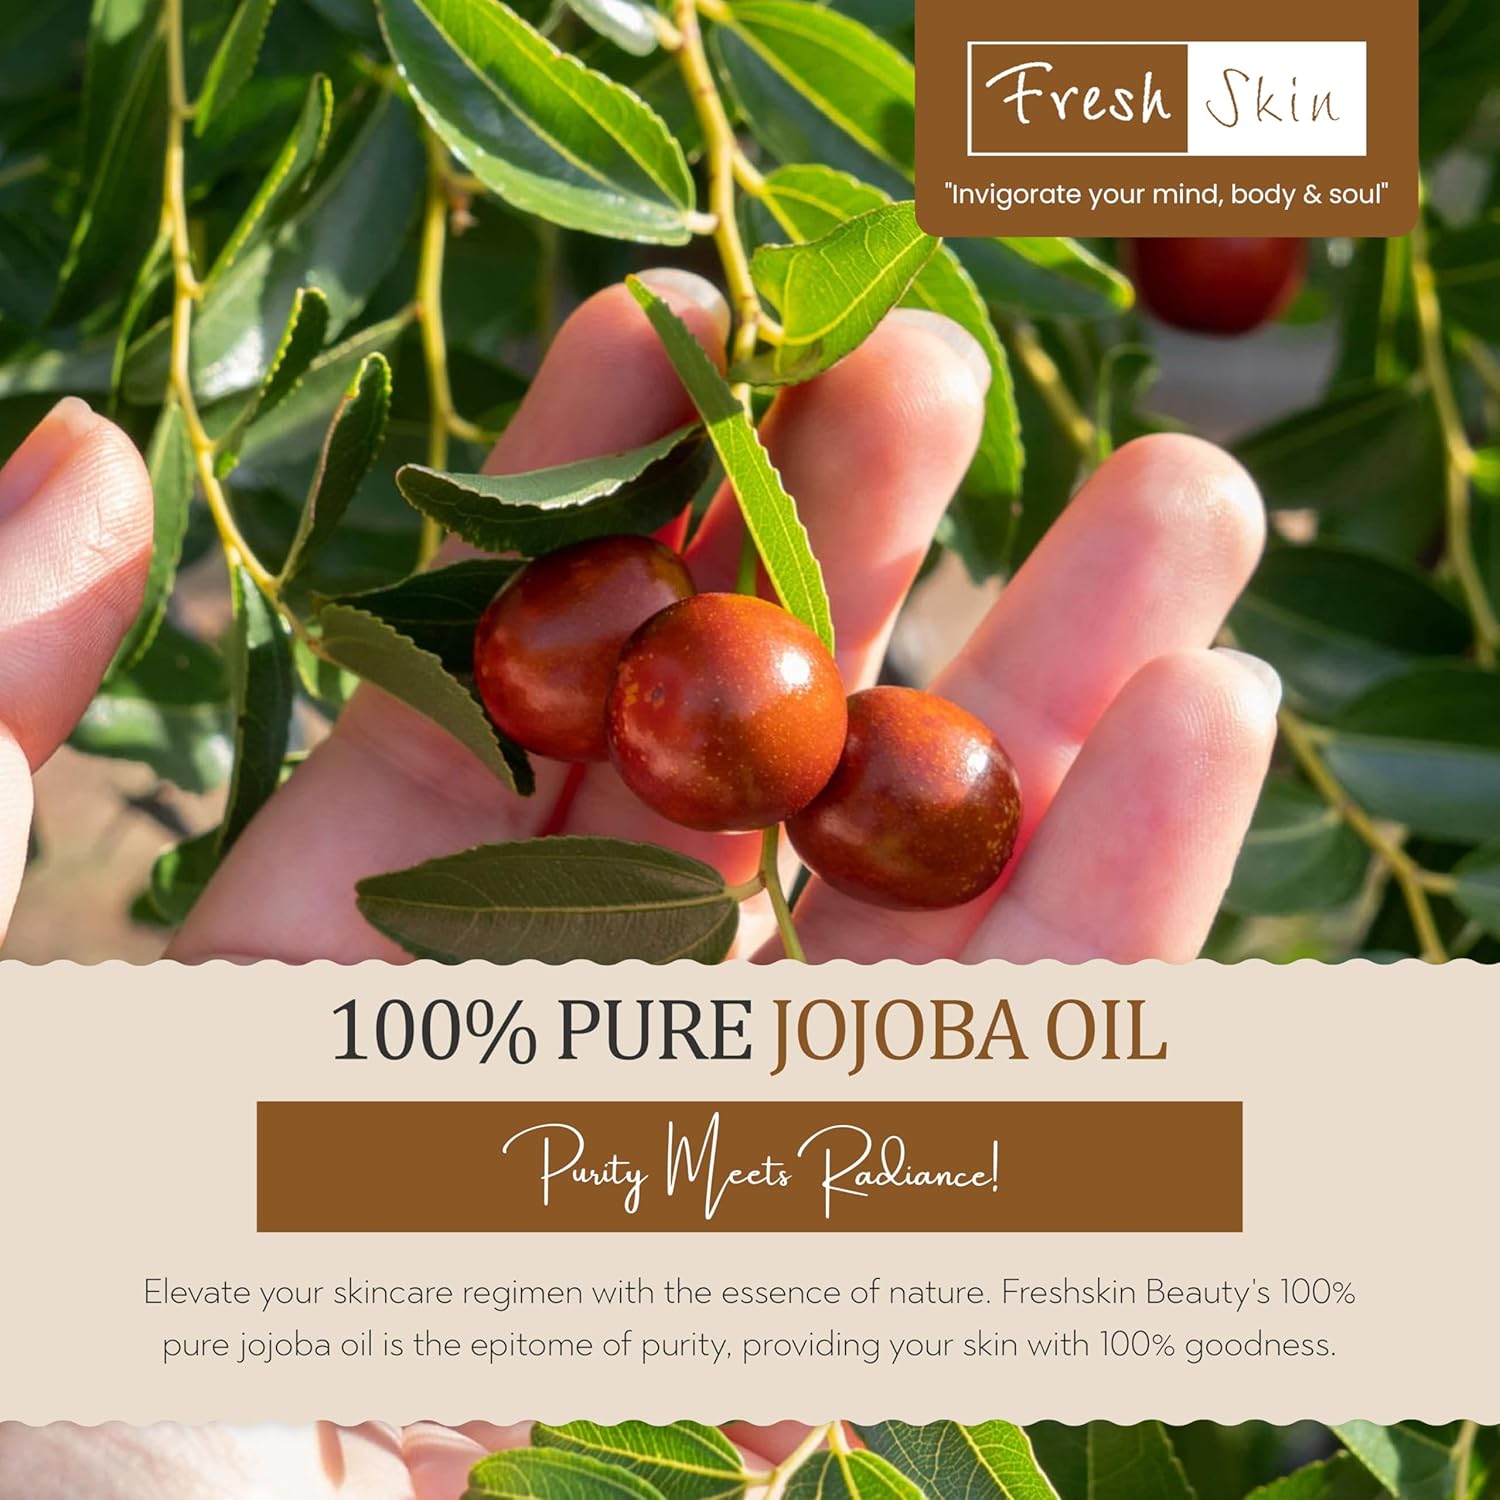 freshskin beauty ltd | Golden Jojoba Oil - 500ml - 100% Pure & Natural - Unrefined, Cold Pressed & Vegan Friendly : Amazon.co.uk: Beauty